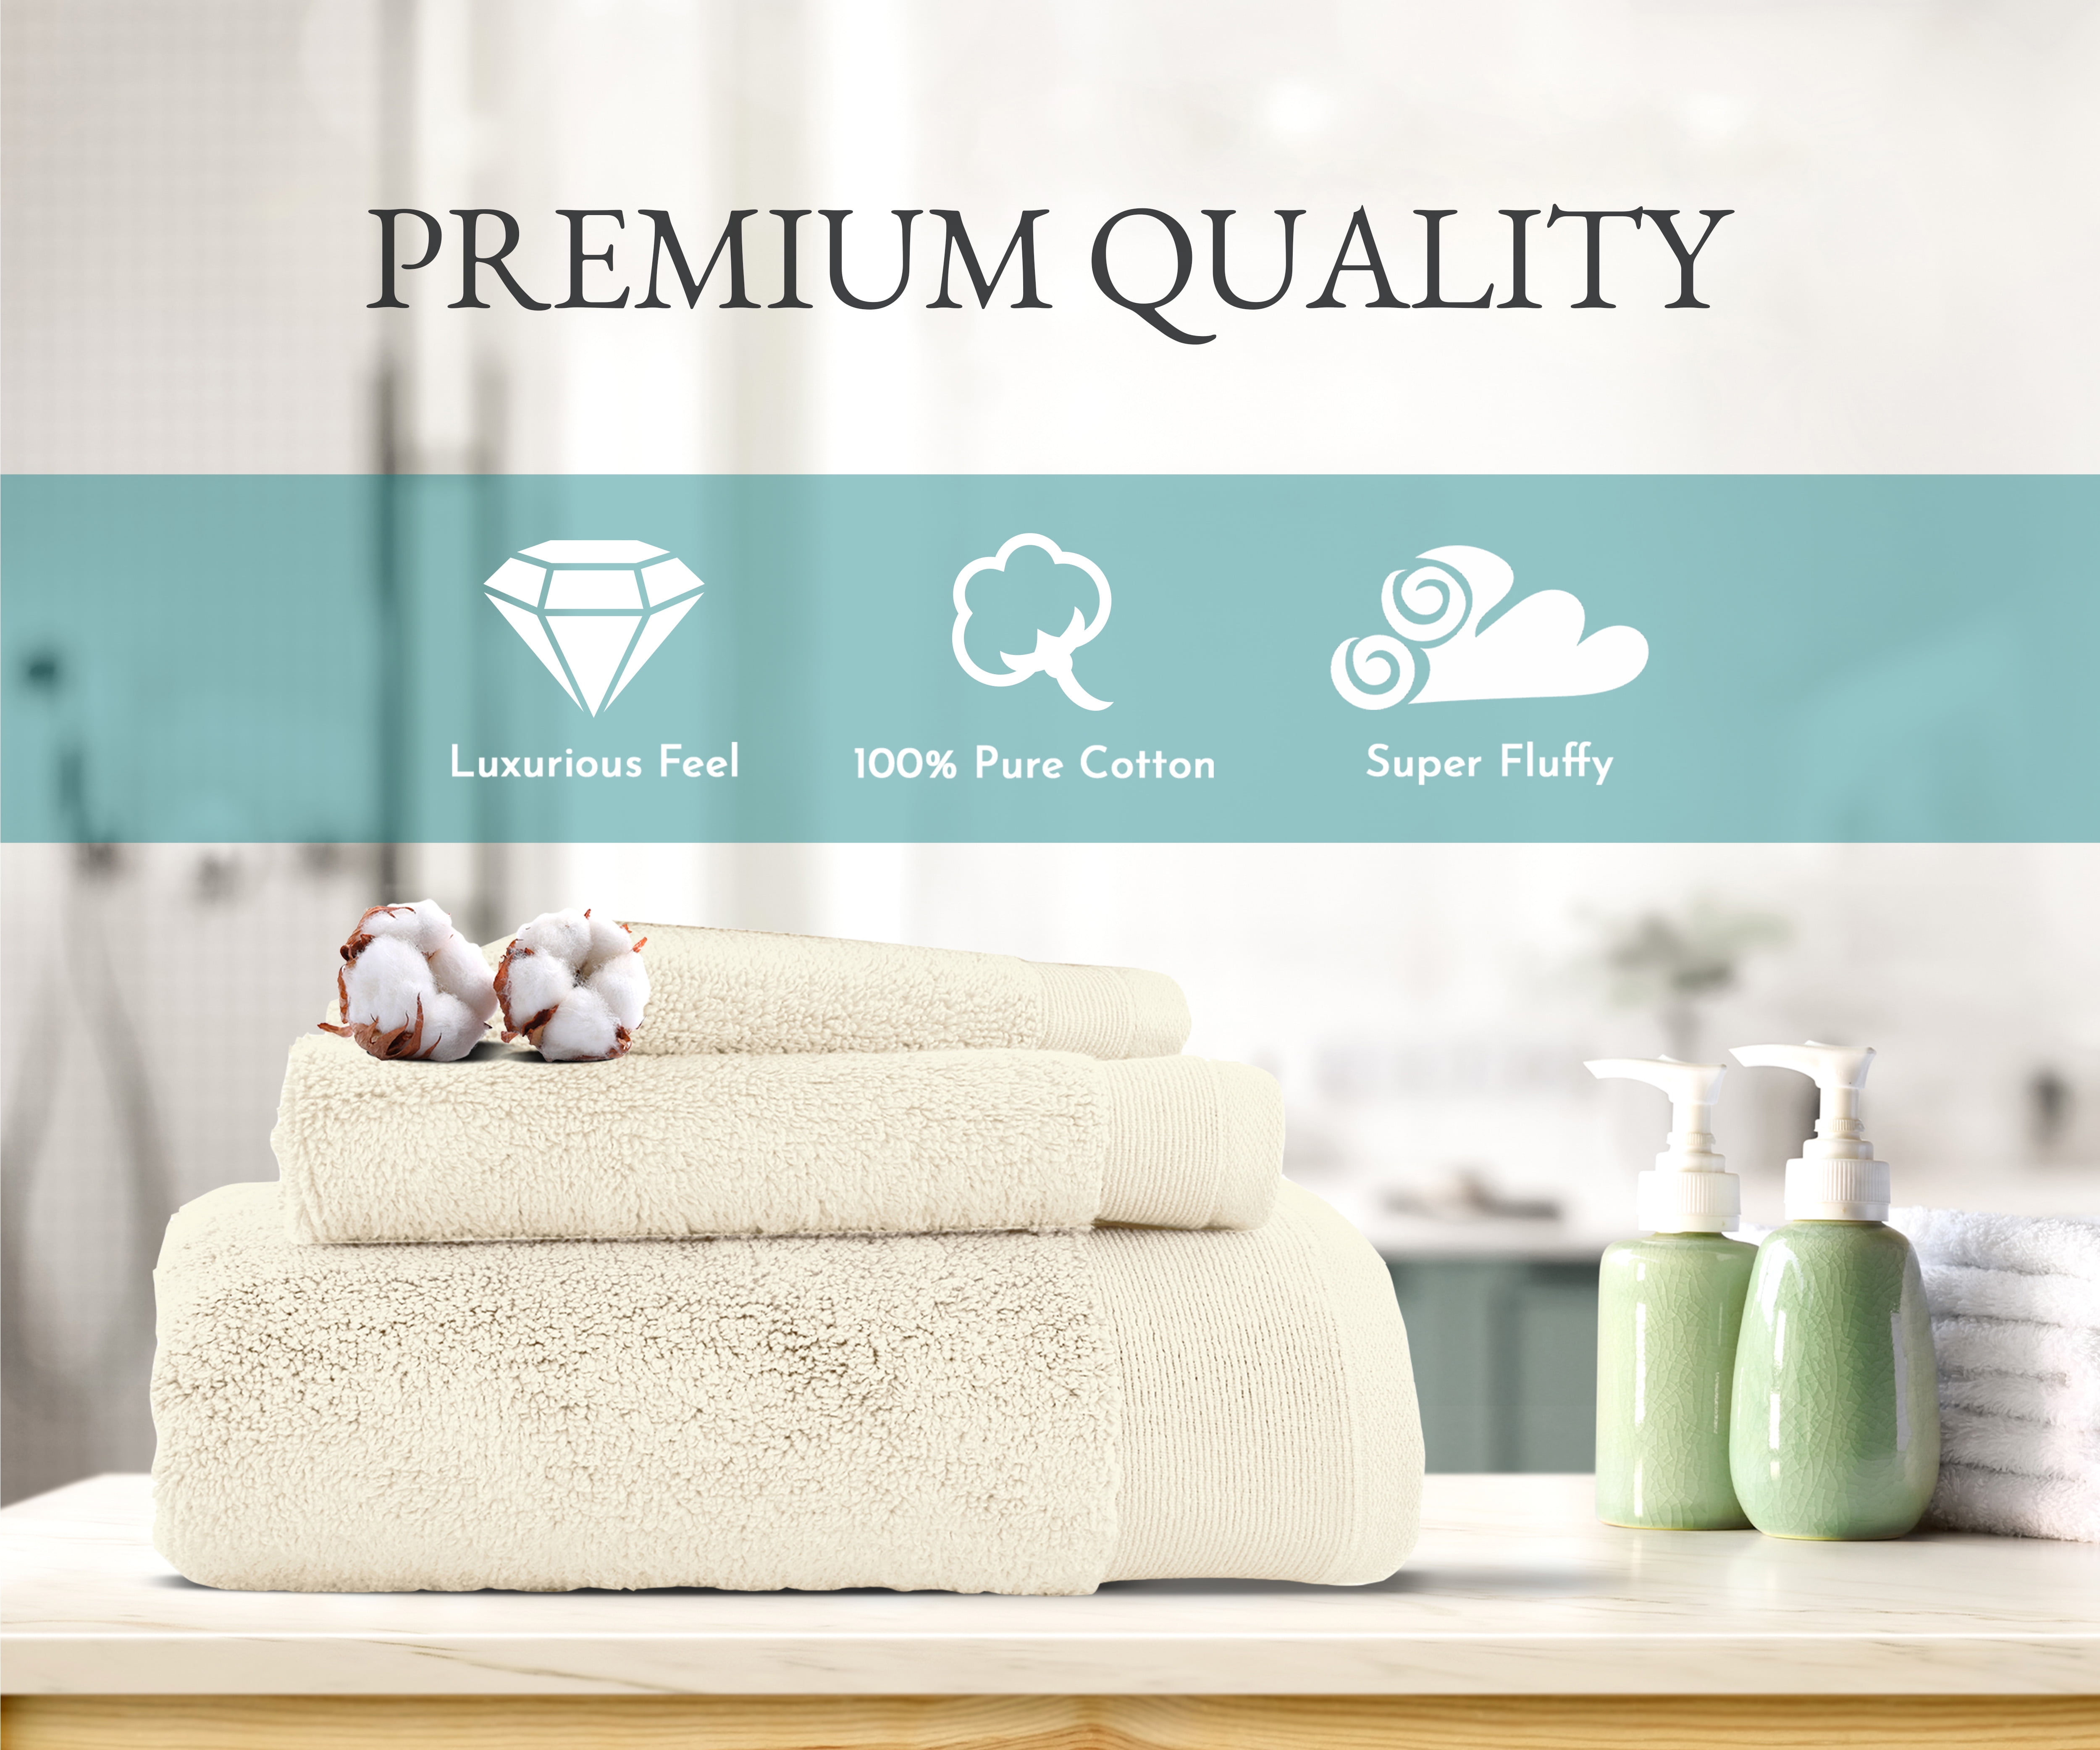 ESSELL Luxury 6 Piece Towel Set, 700 GSM 100% Cotton - 2 Bath Towels, 2  Hand Towels, 2 Washcloths, Zero Twists, Ultra Soft & Super Absorbent Meadow